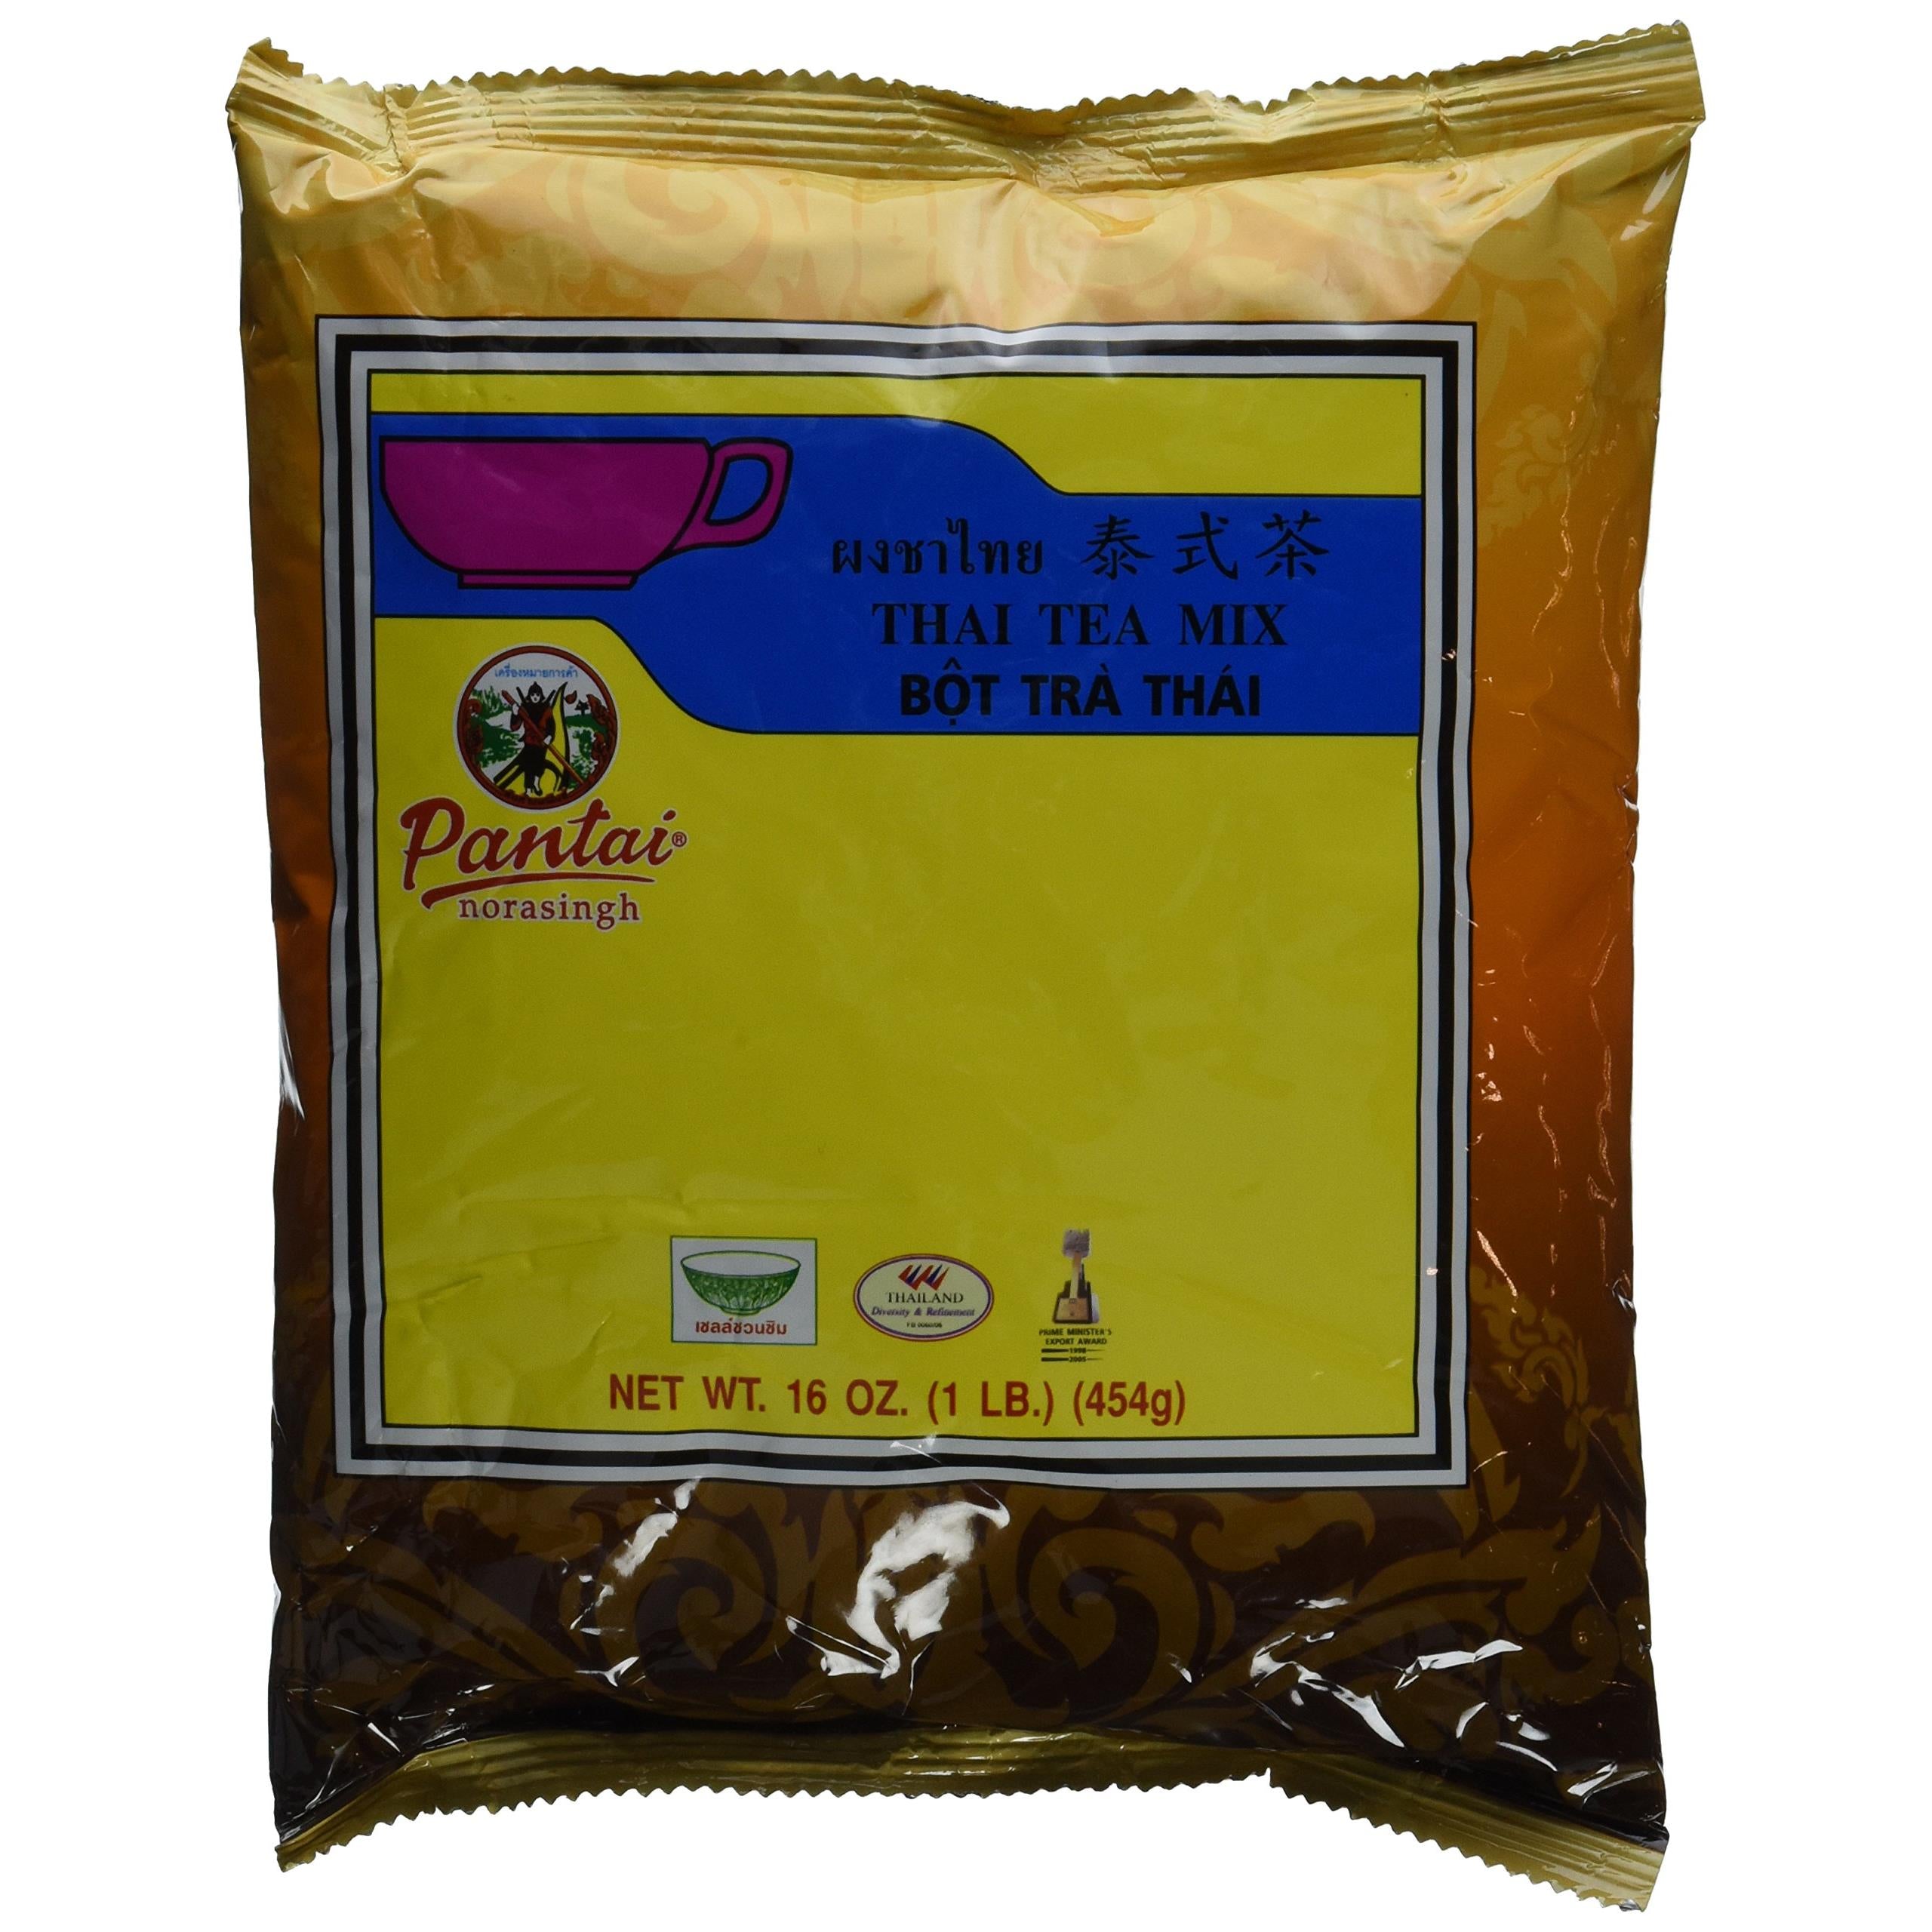 Pantai Norasingh Thai Tea Mix 1 Pound Bag - 4 Pack